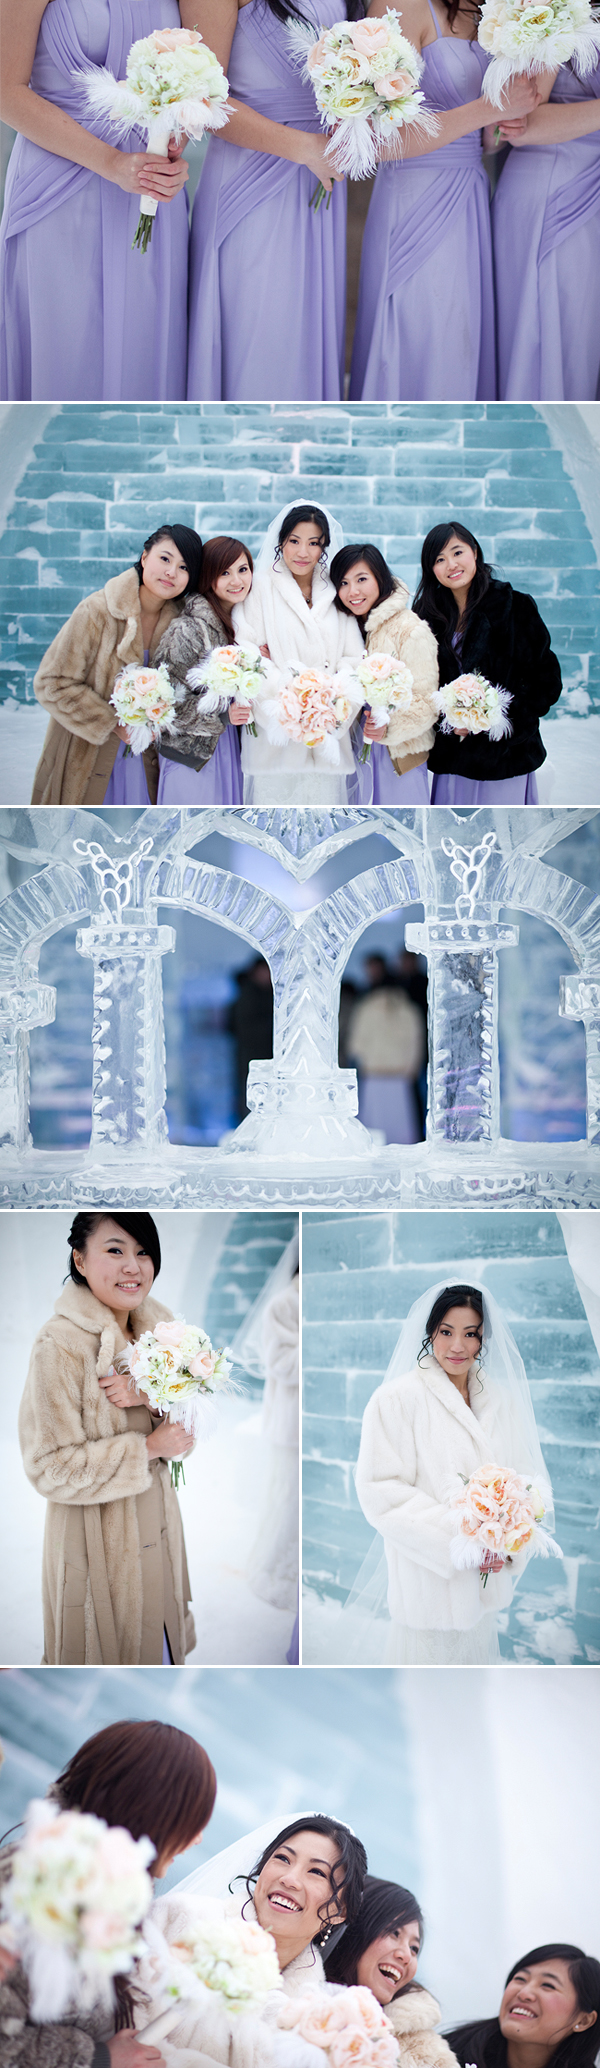 ice-hotel-wedding03